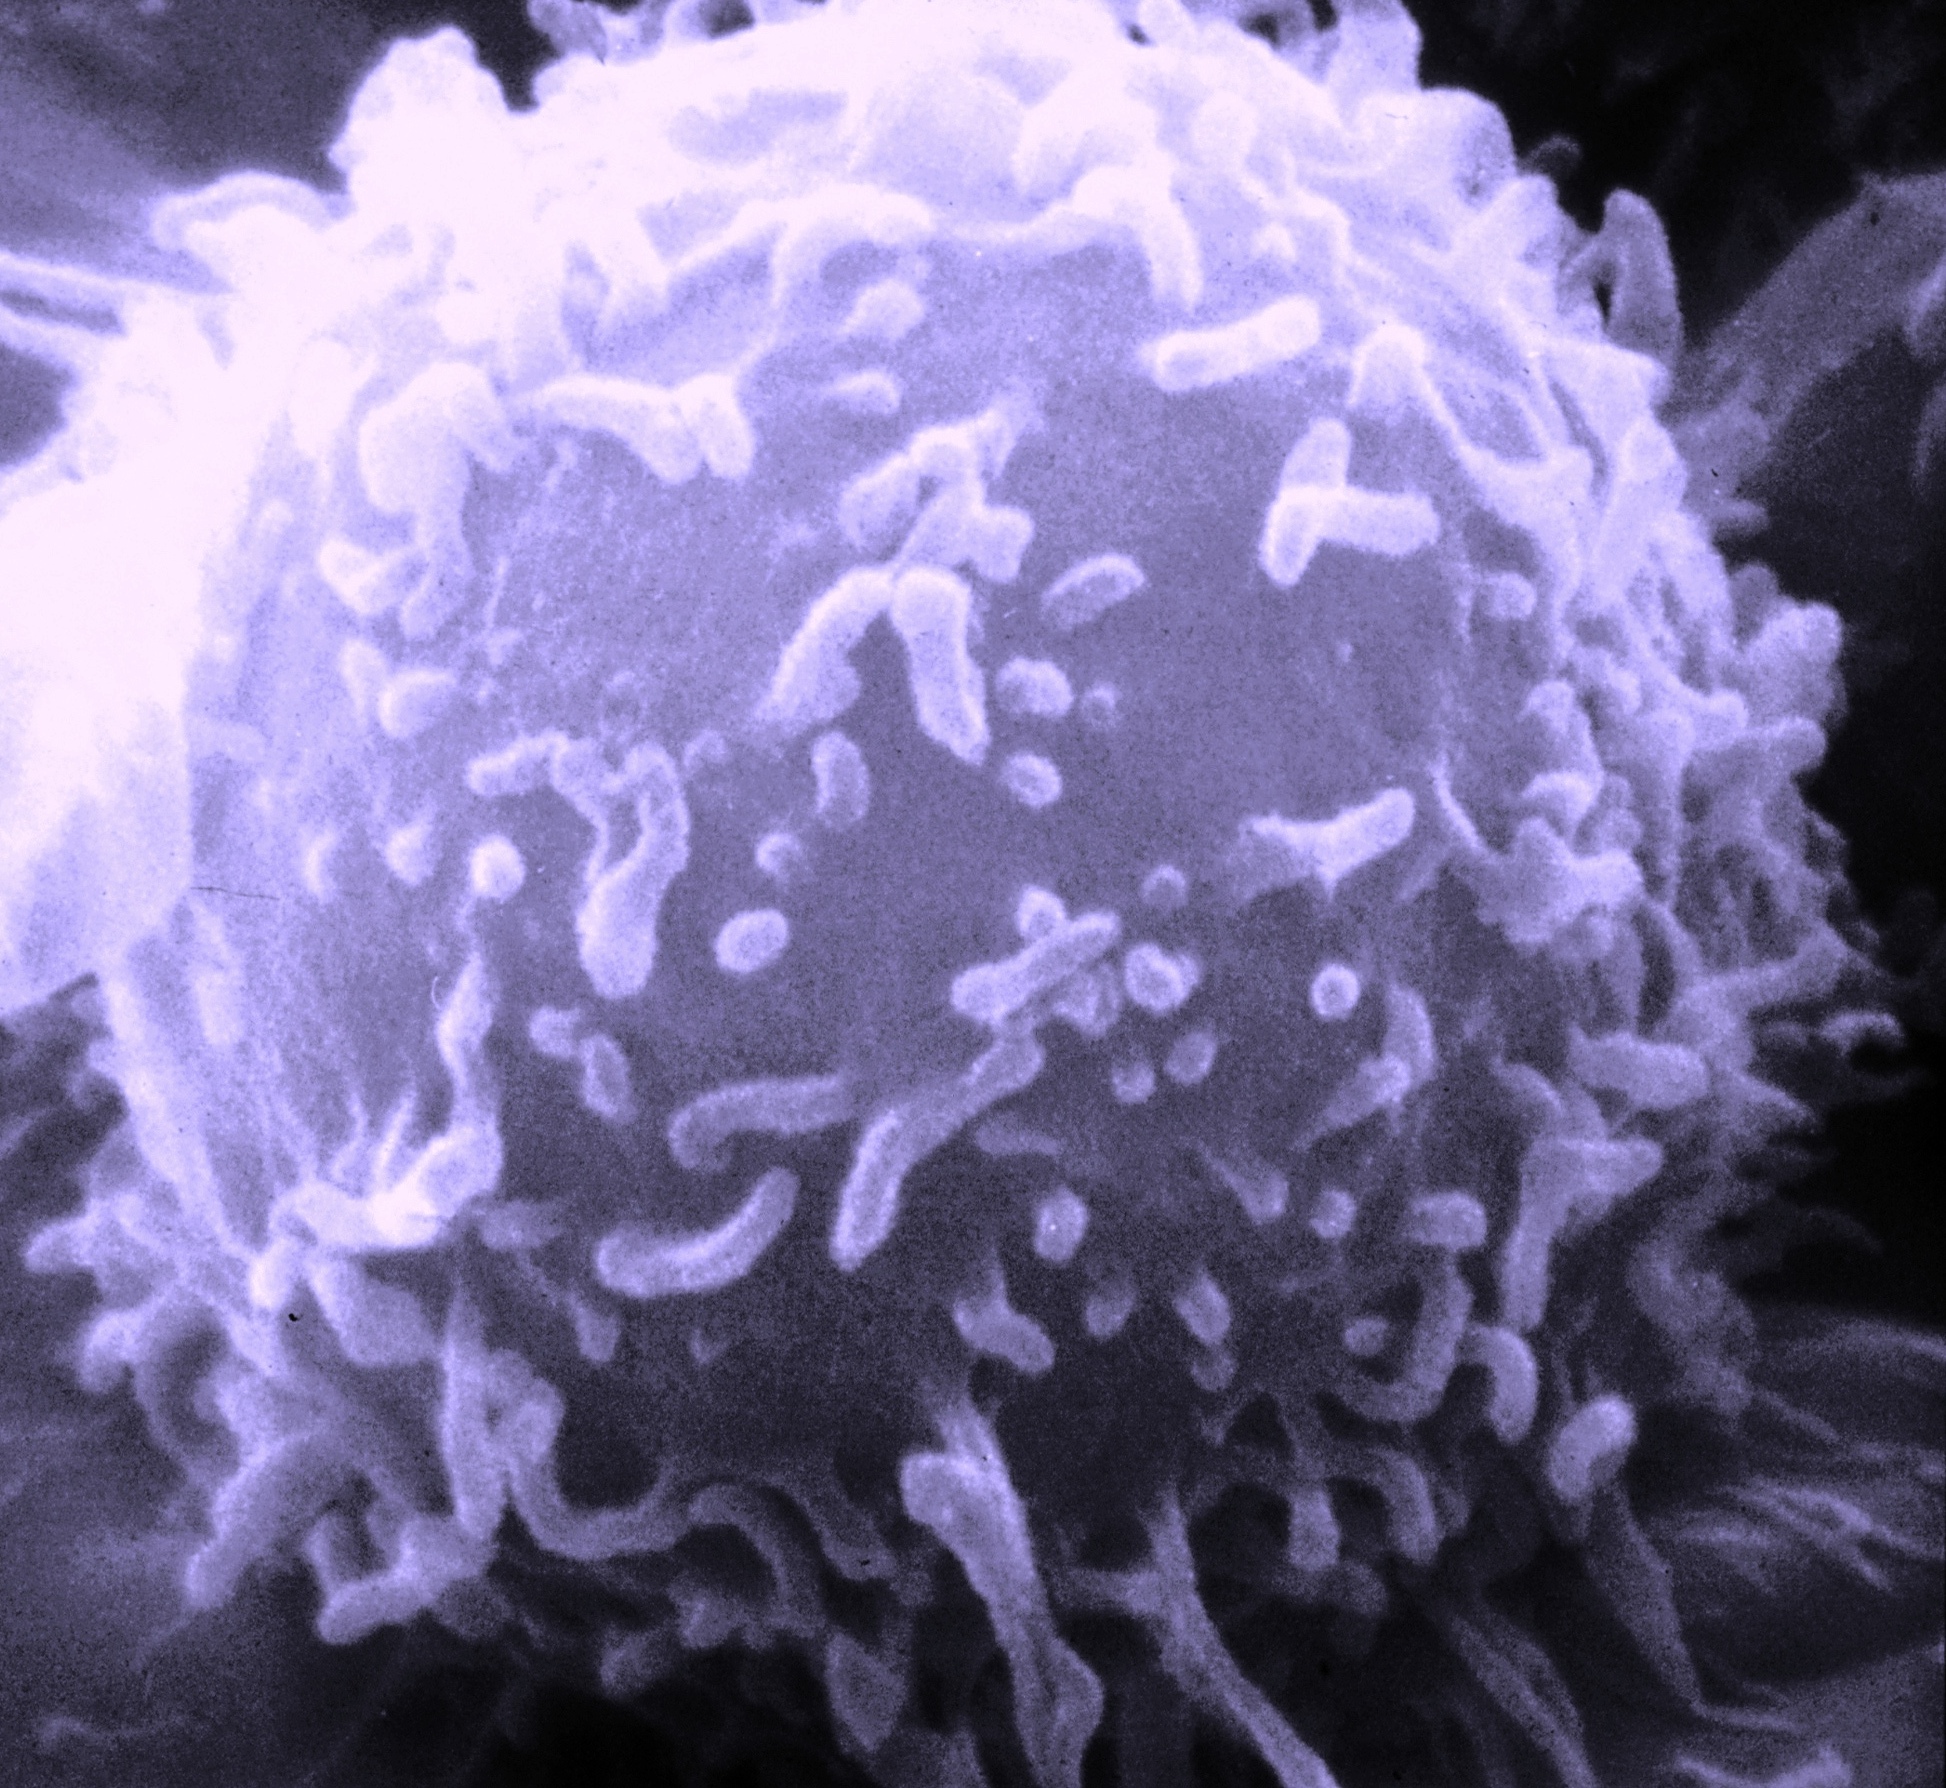 HI-Virus fotografiert durch ein Mikroskop